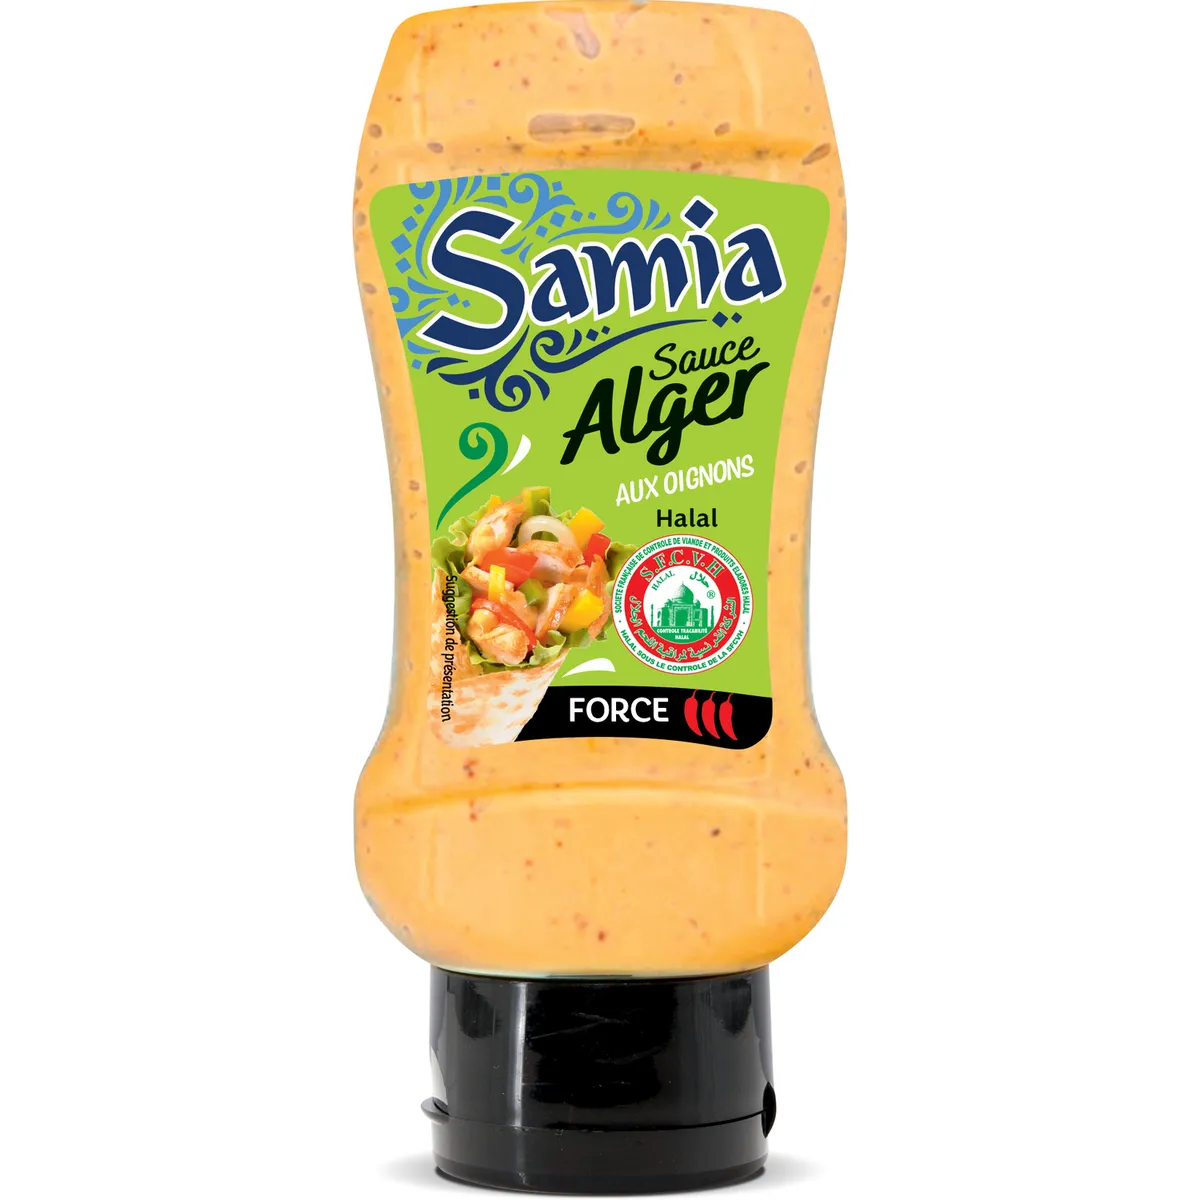 sauces samia alger halal